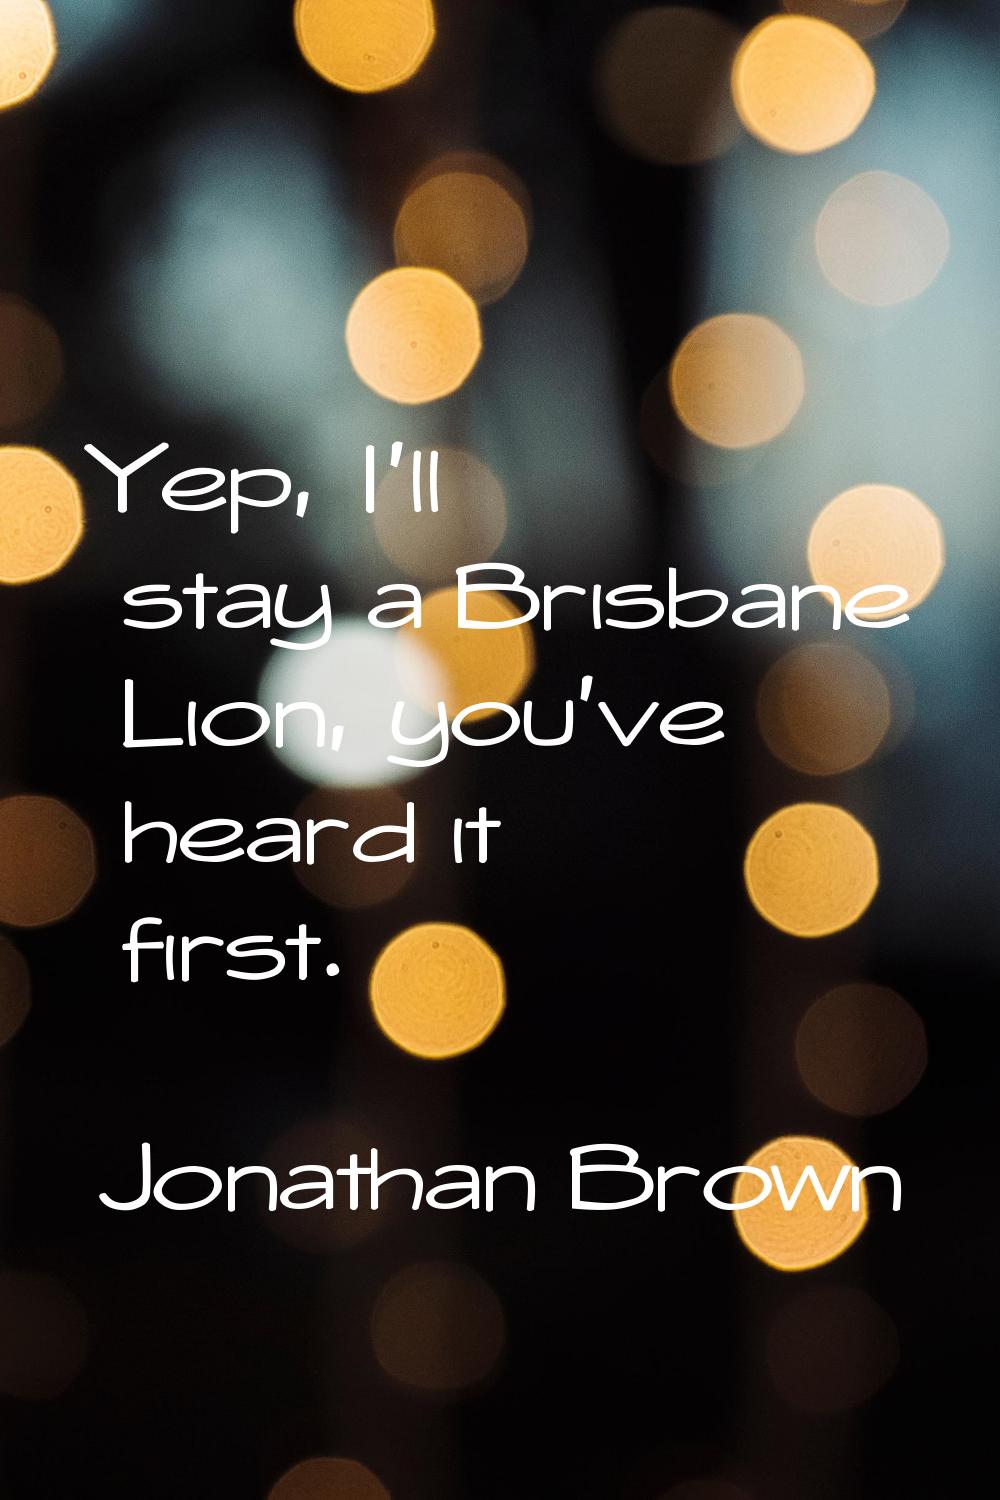 Yep, I'll stay a Brisbane Lion, you've heard it first.